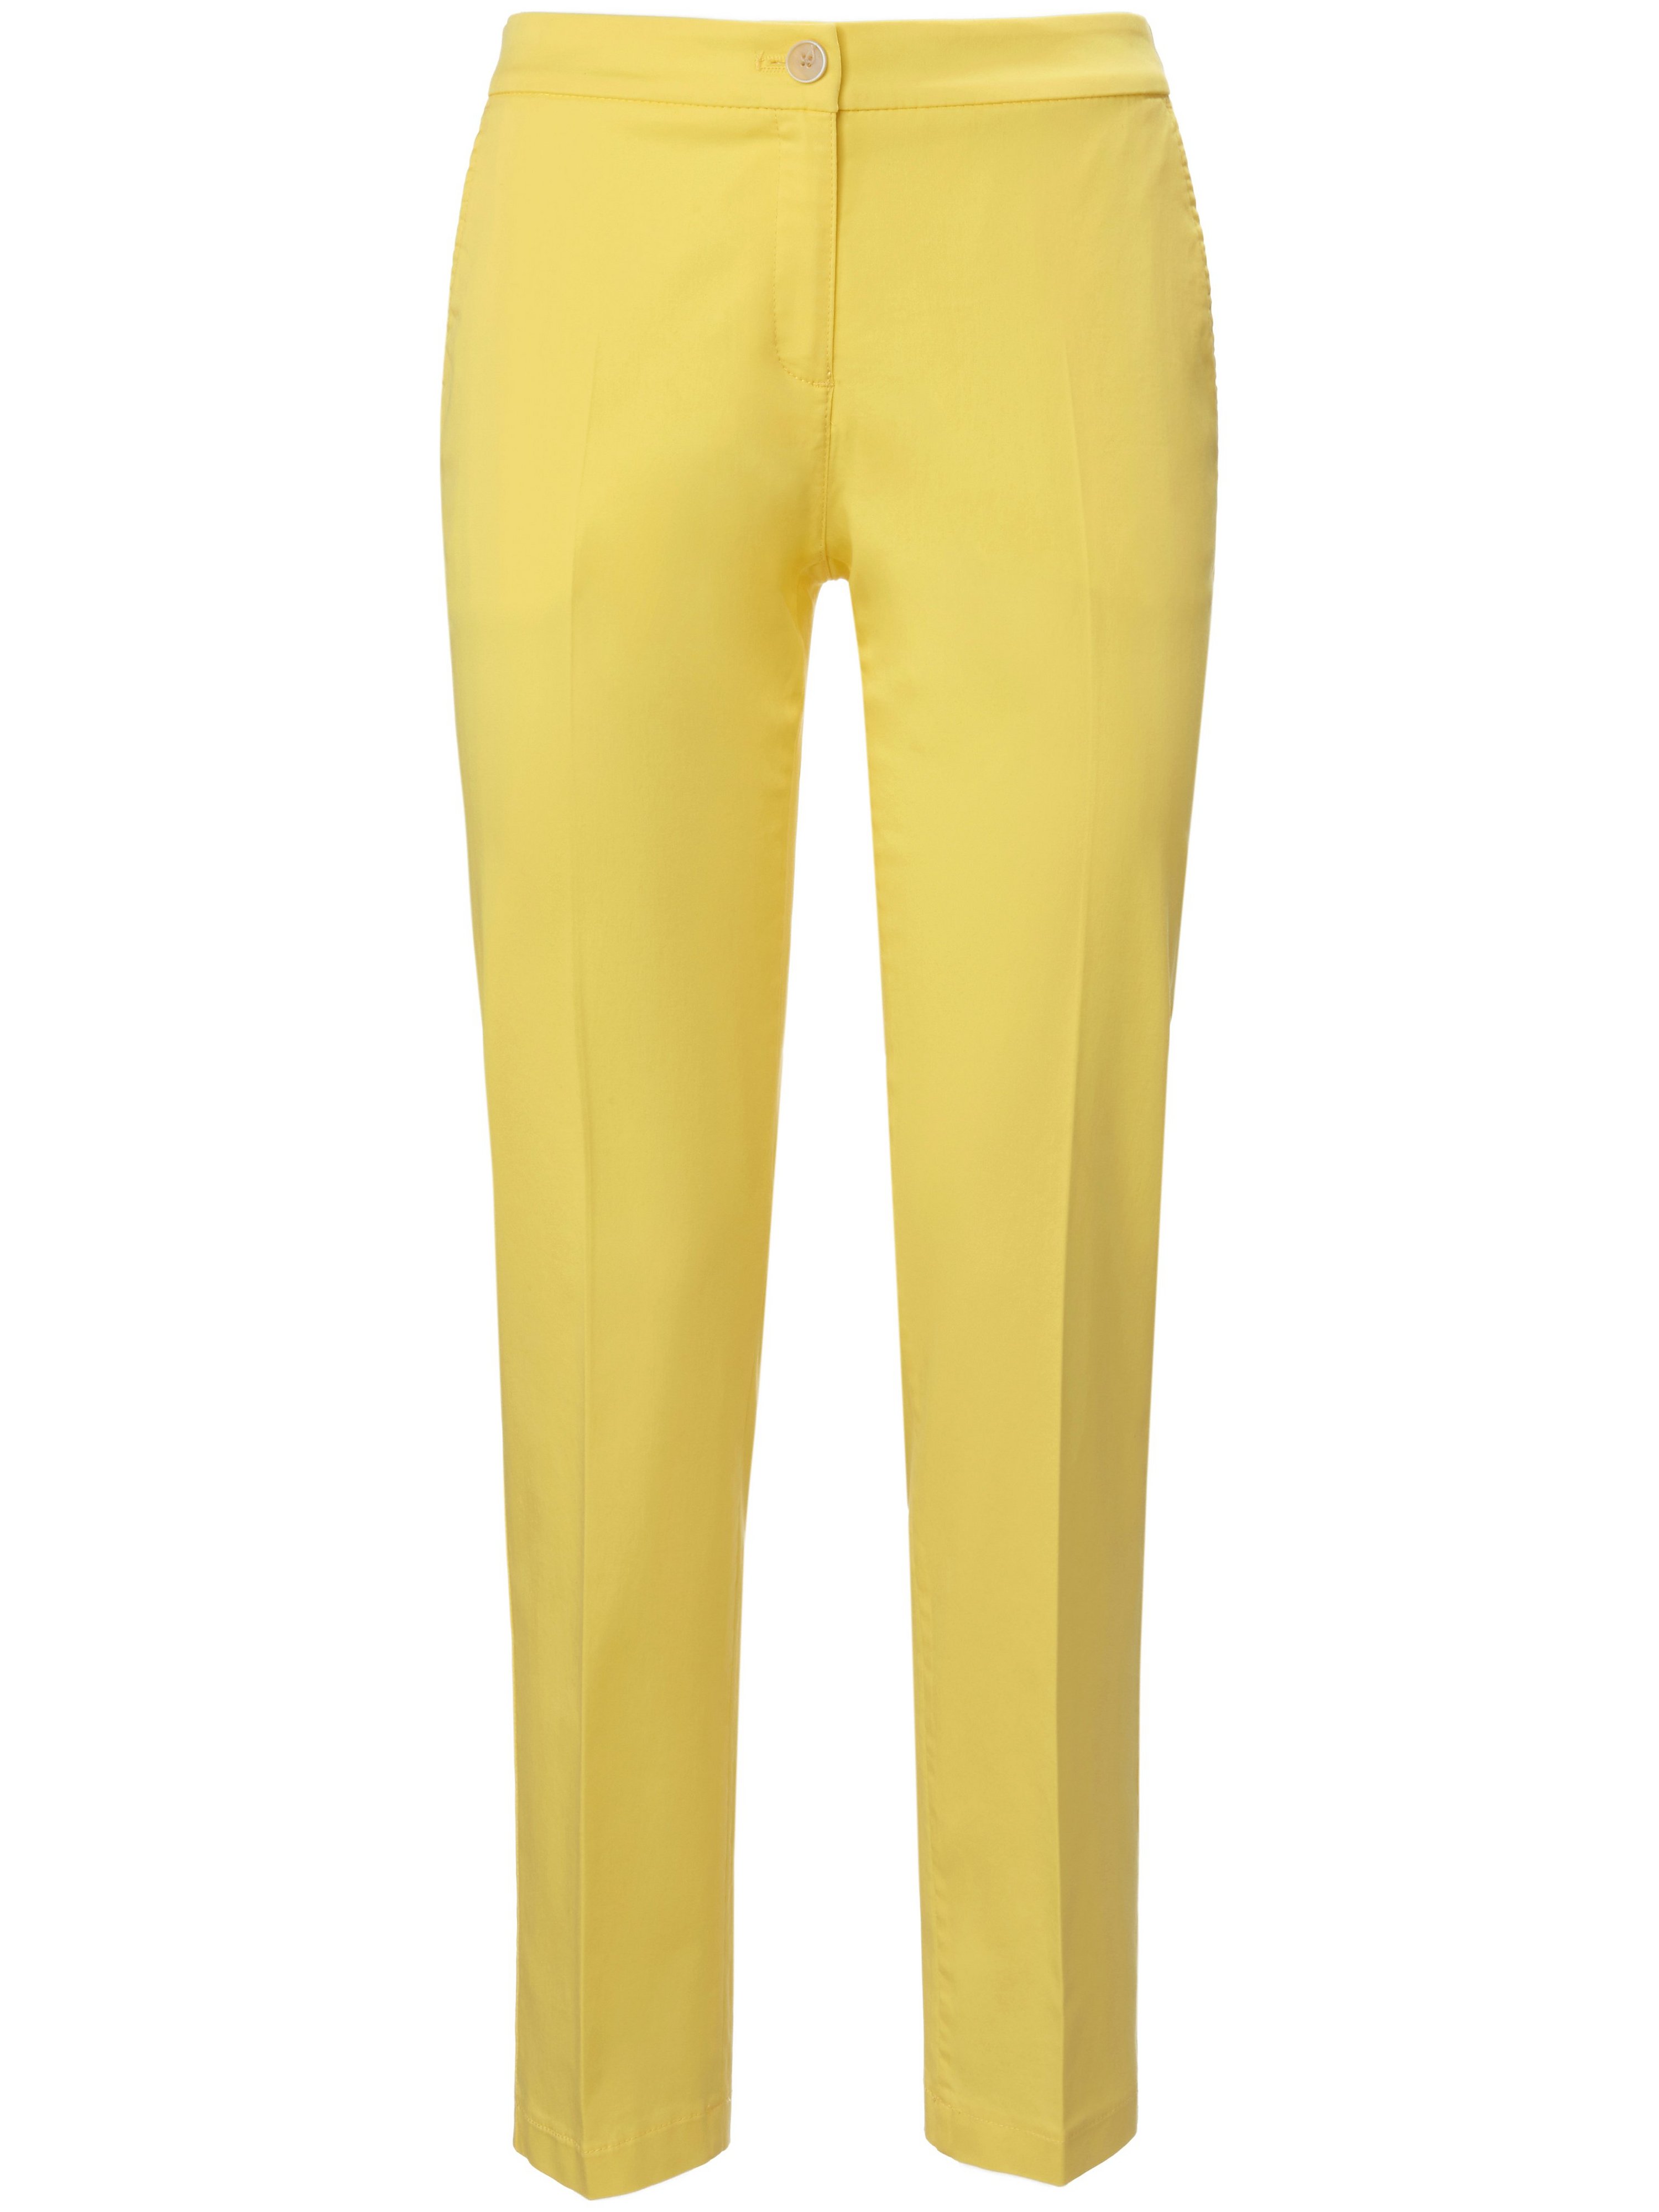 Le pantalon Modern Fit longueur chevilles  Brax Feel Good jaune